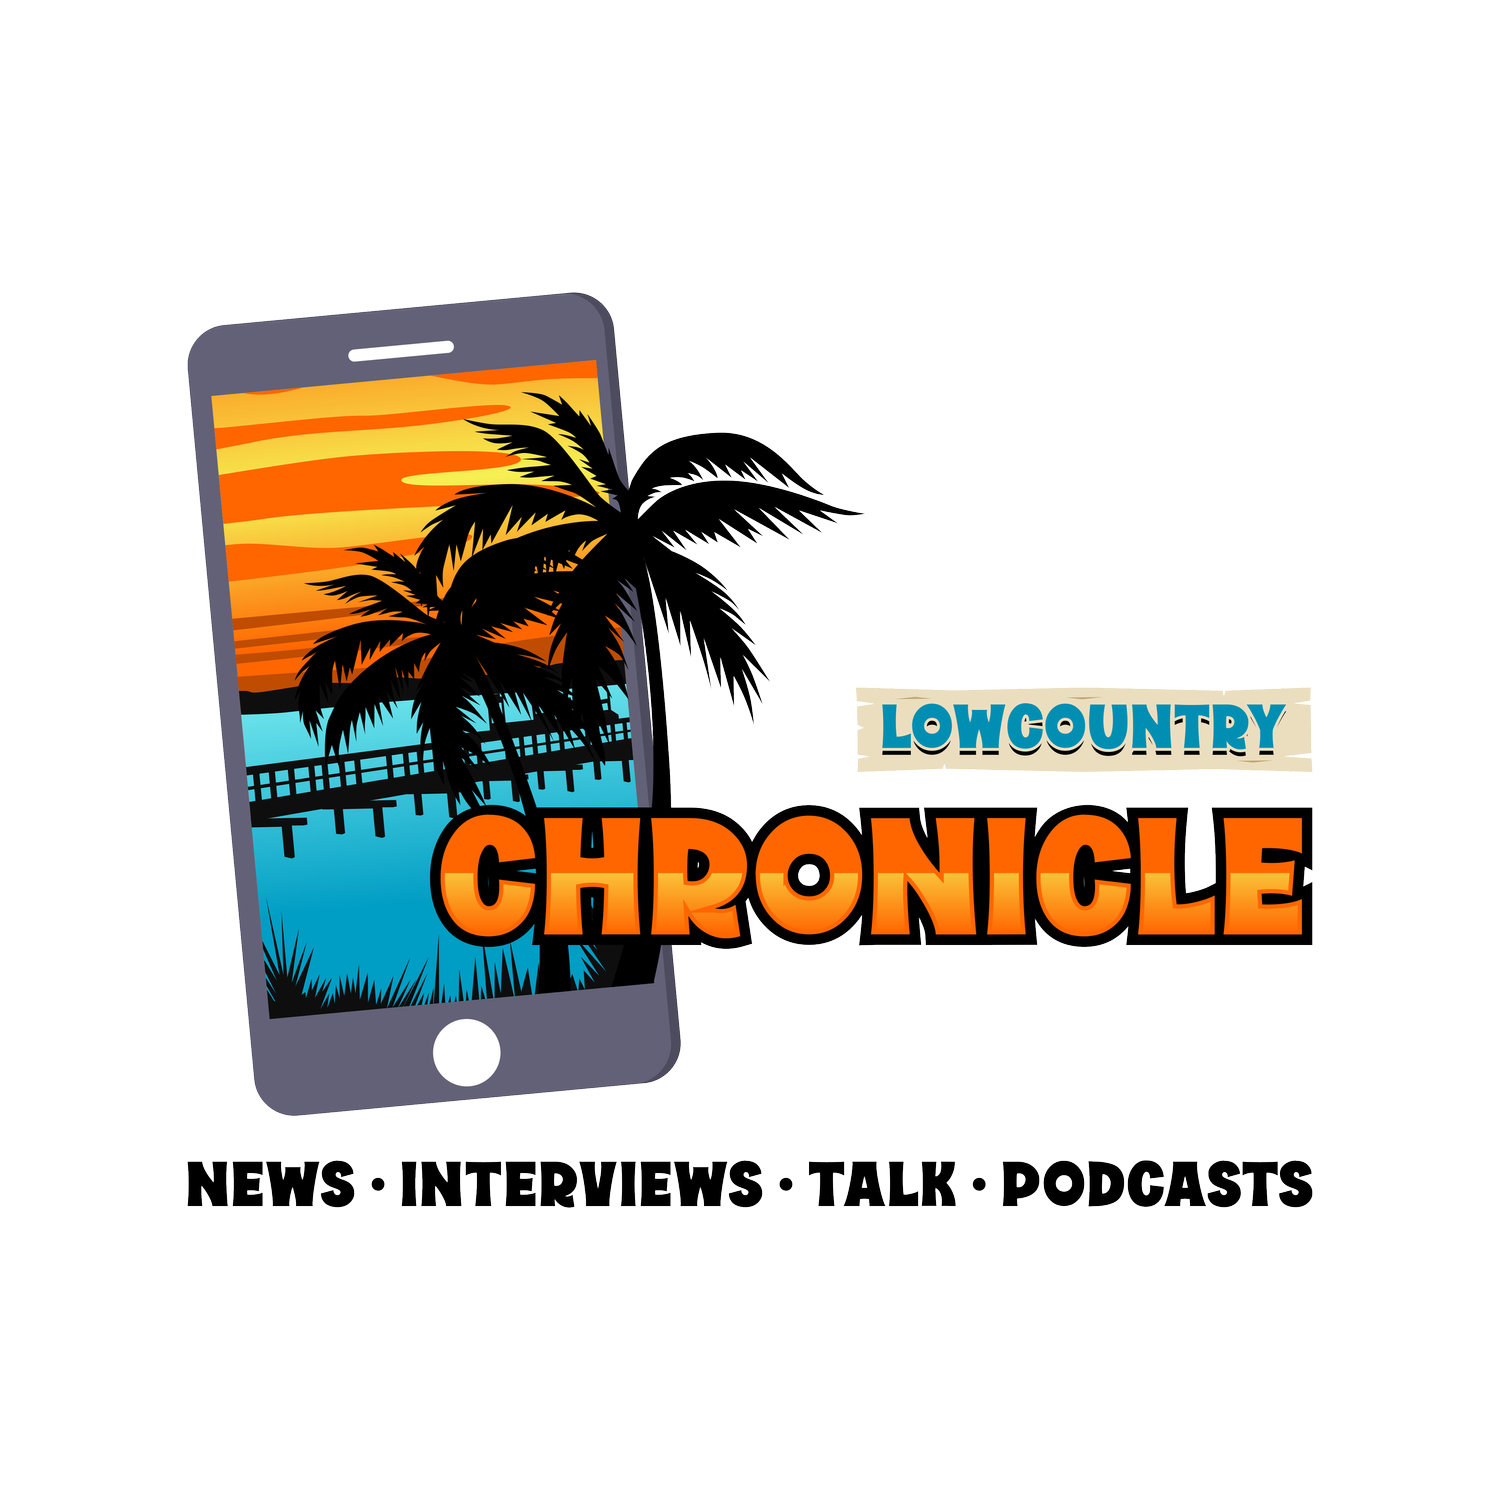 Lowcountry Chronicle